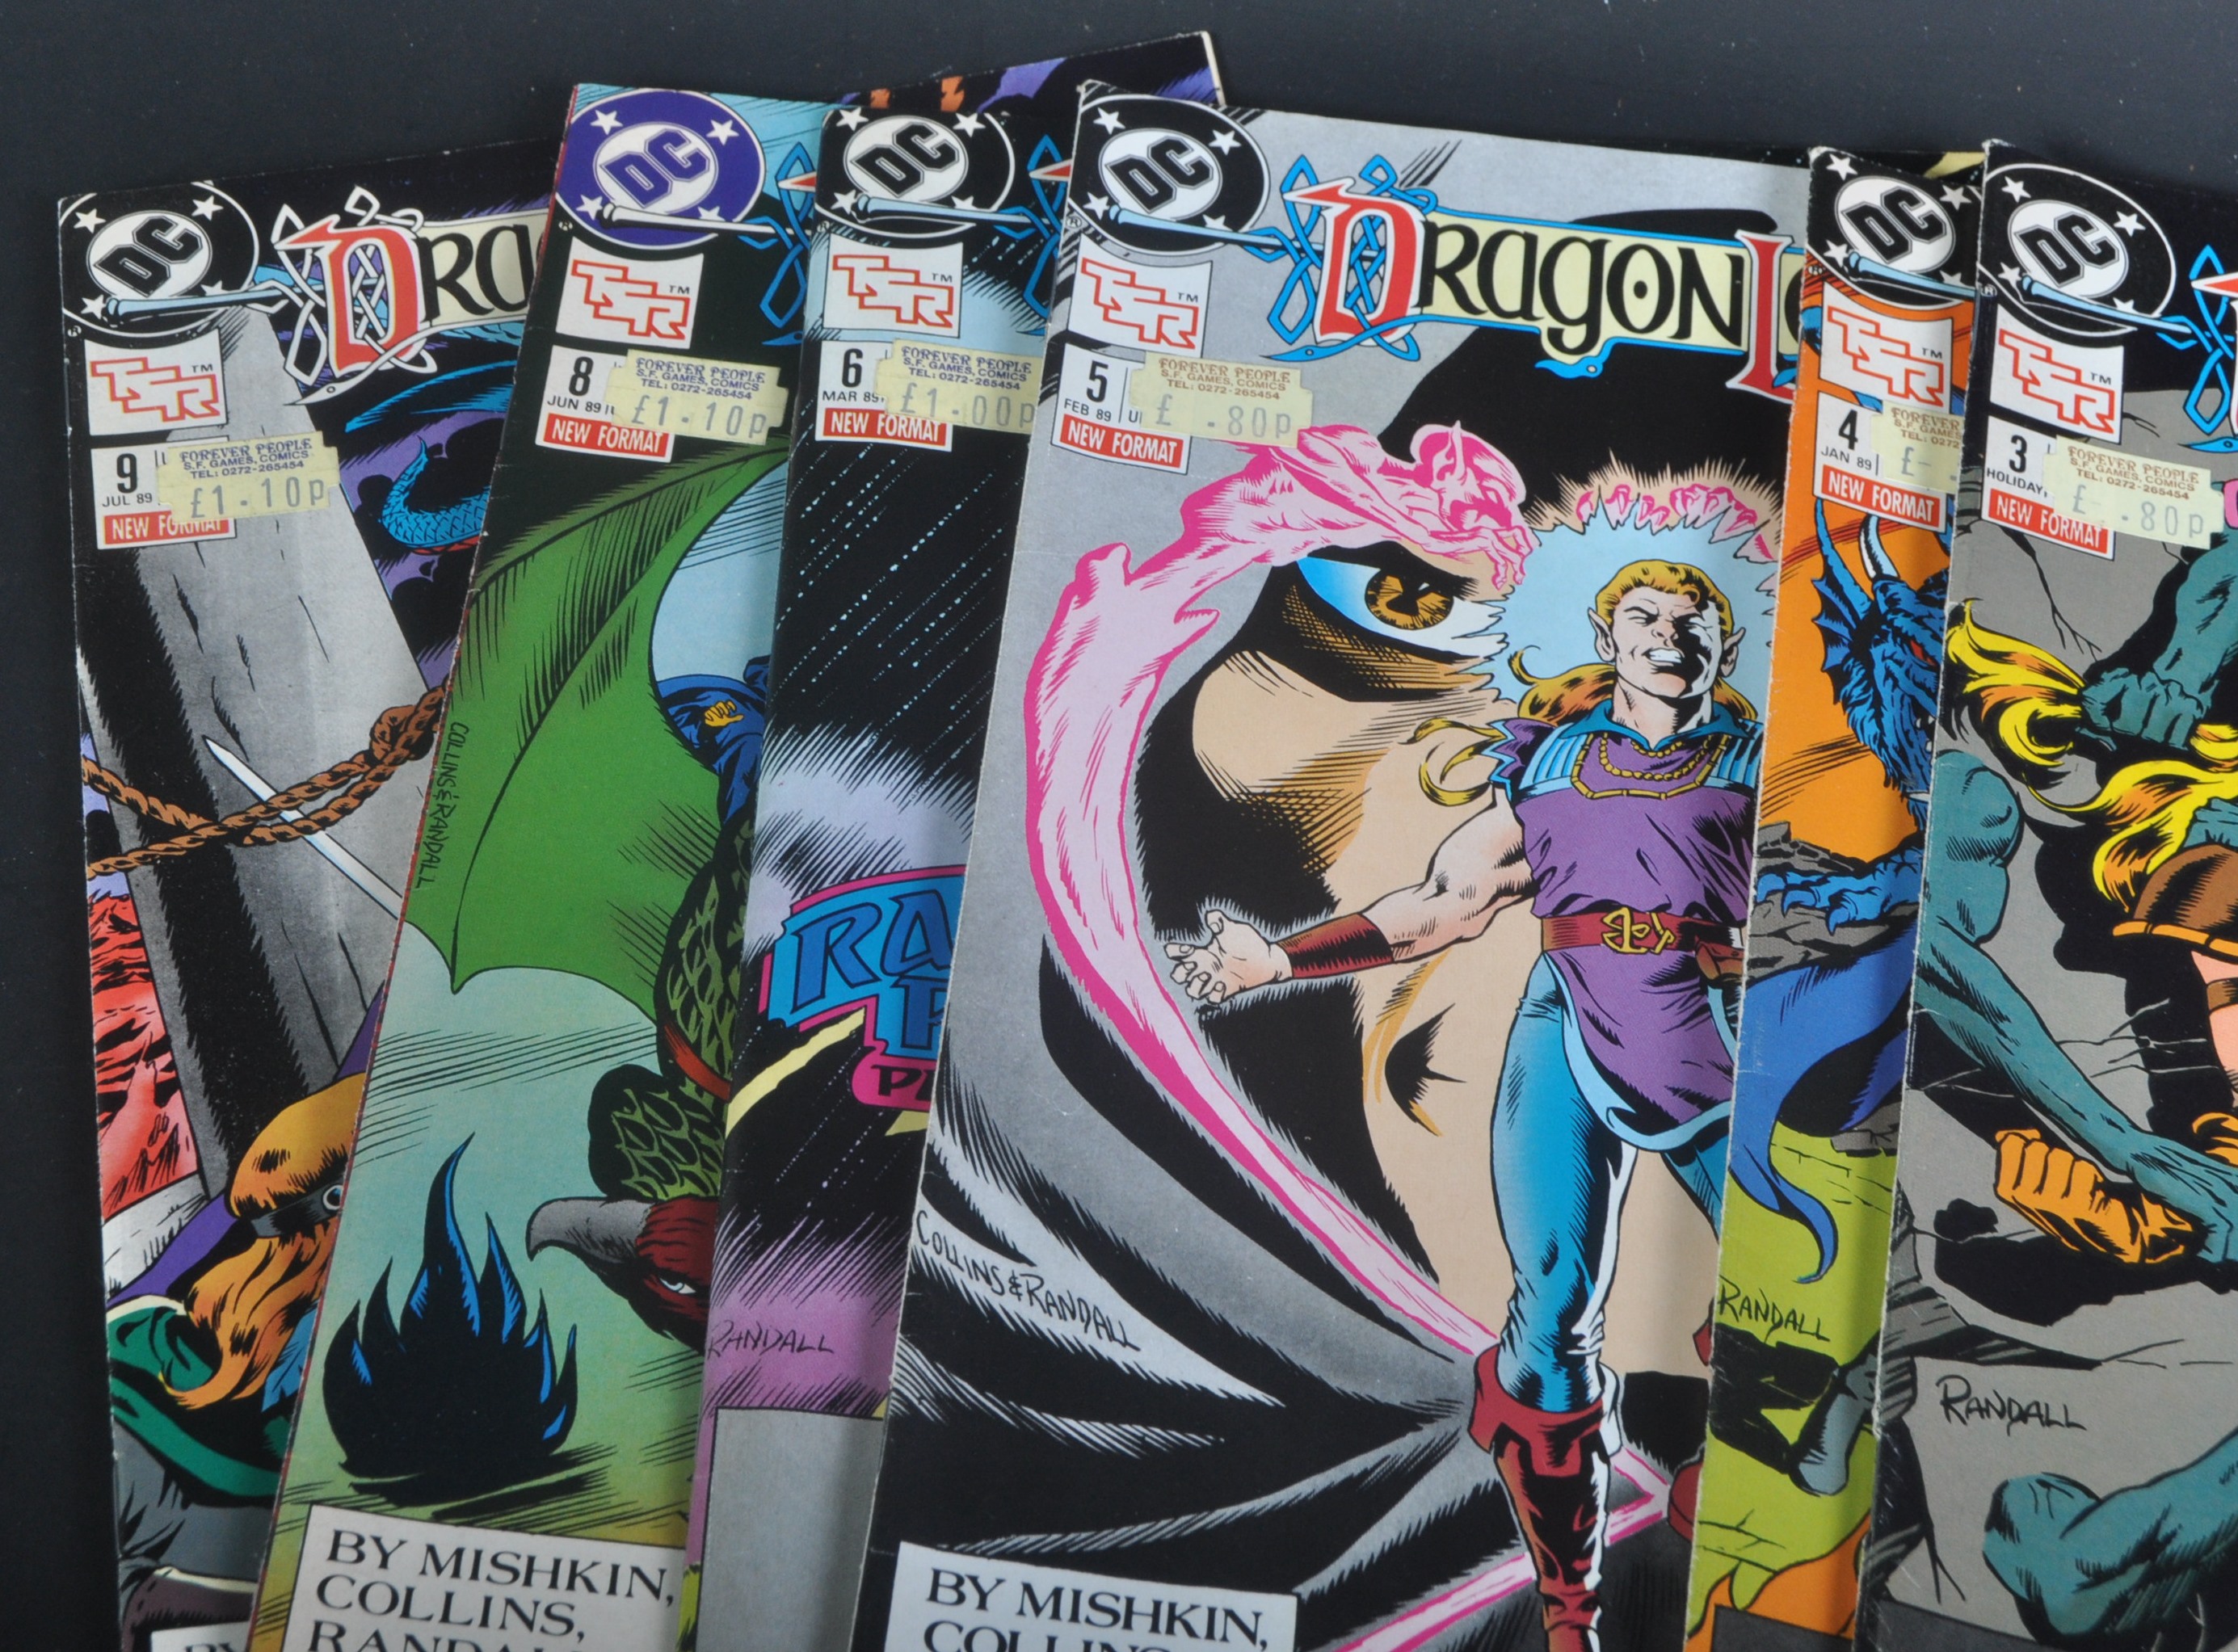 DC COMICS - DRAGON LANCE & TAILGUNNER JO - VINTAGE COMIC BOOKS - Image 4 of 6